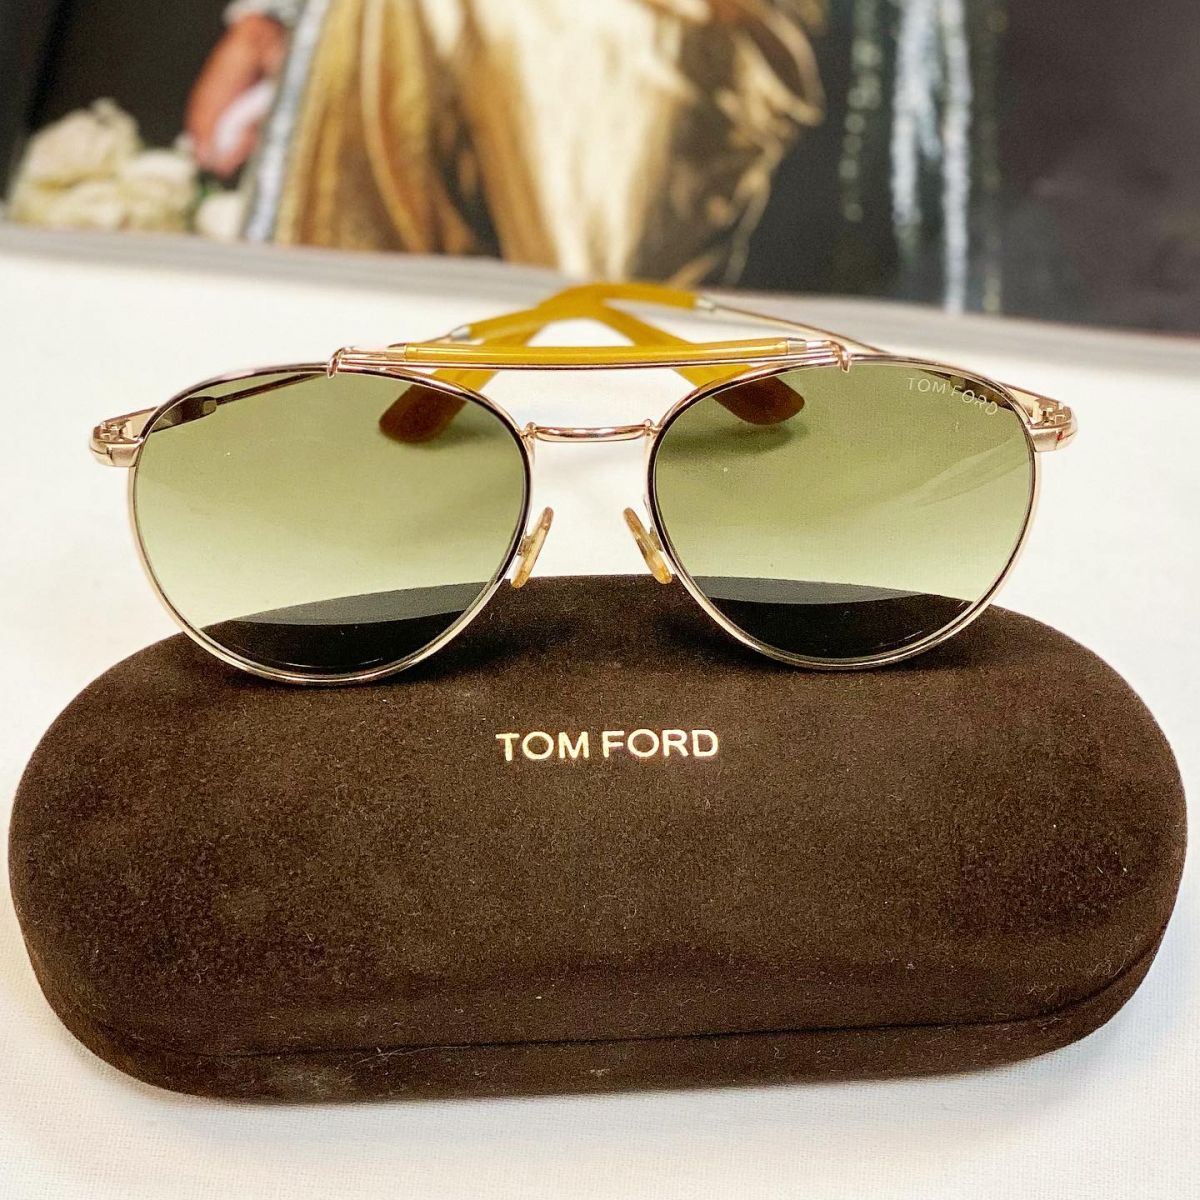 Очки Tom Ford цена 12 308 руб 